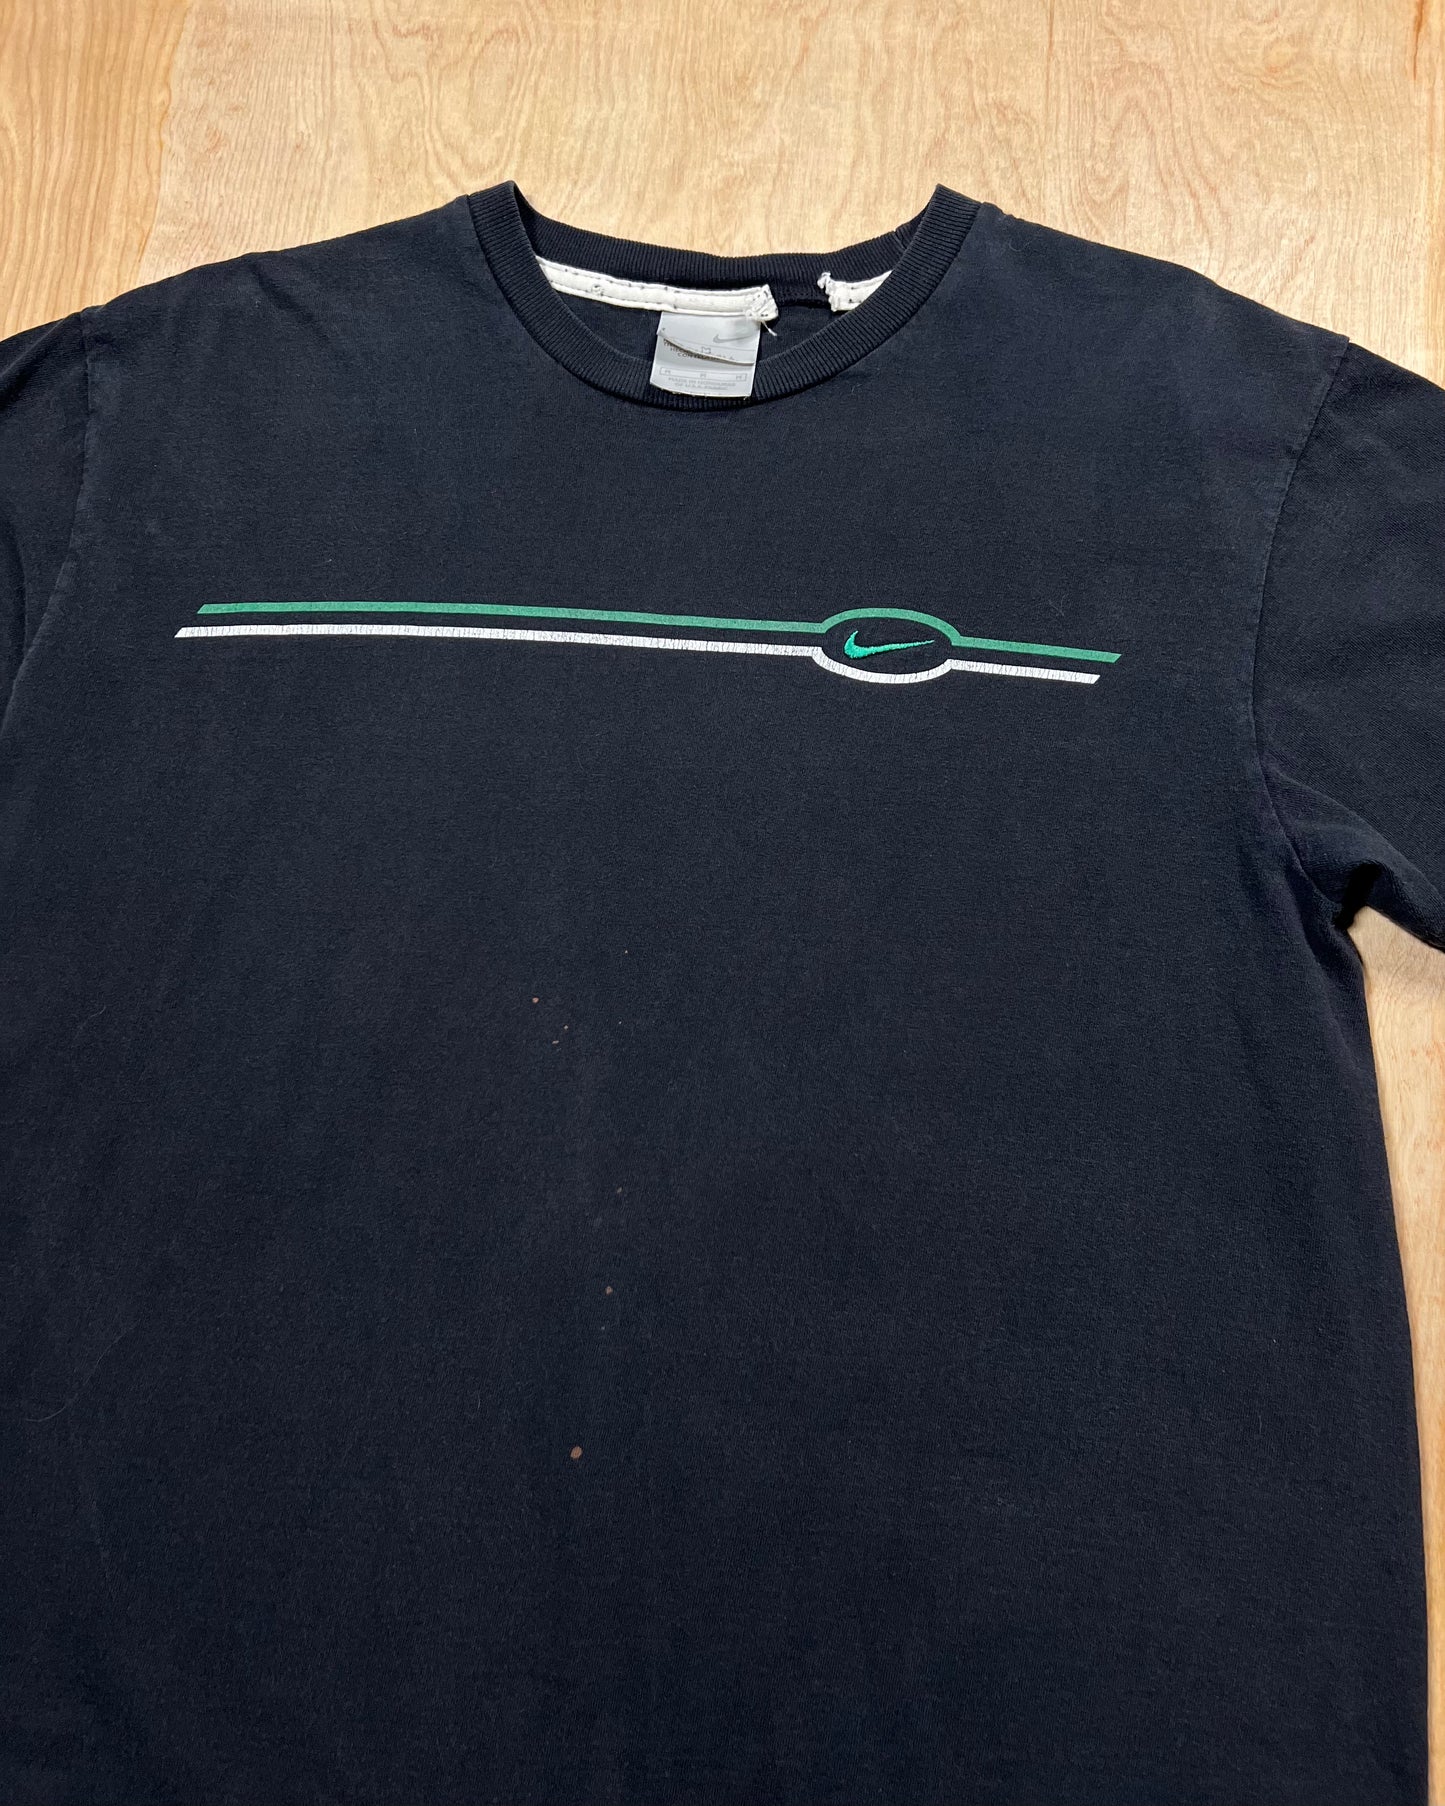 Early 2000's Nike T-Shirt